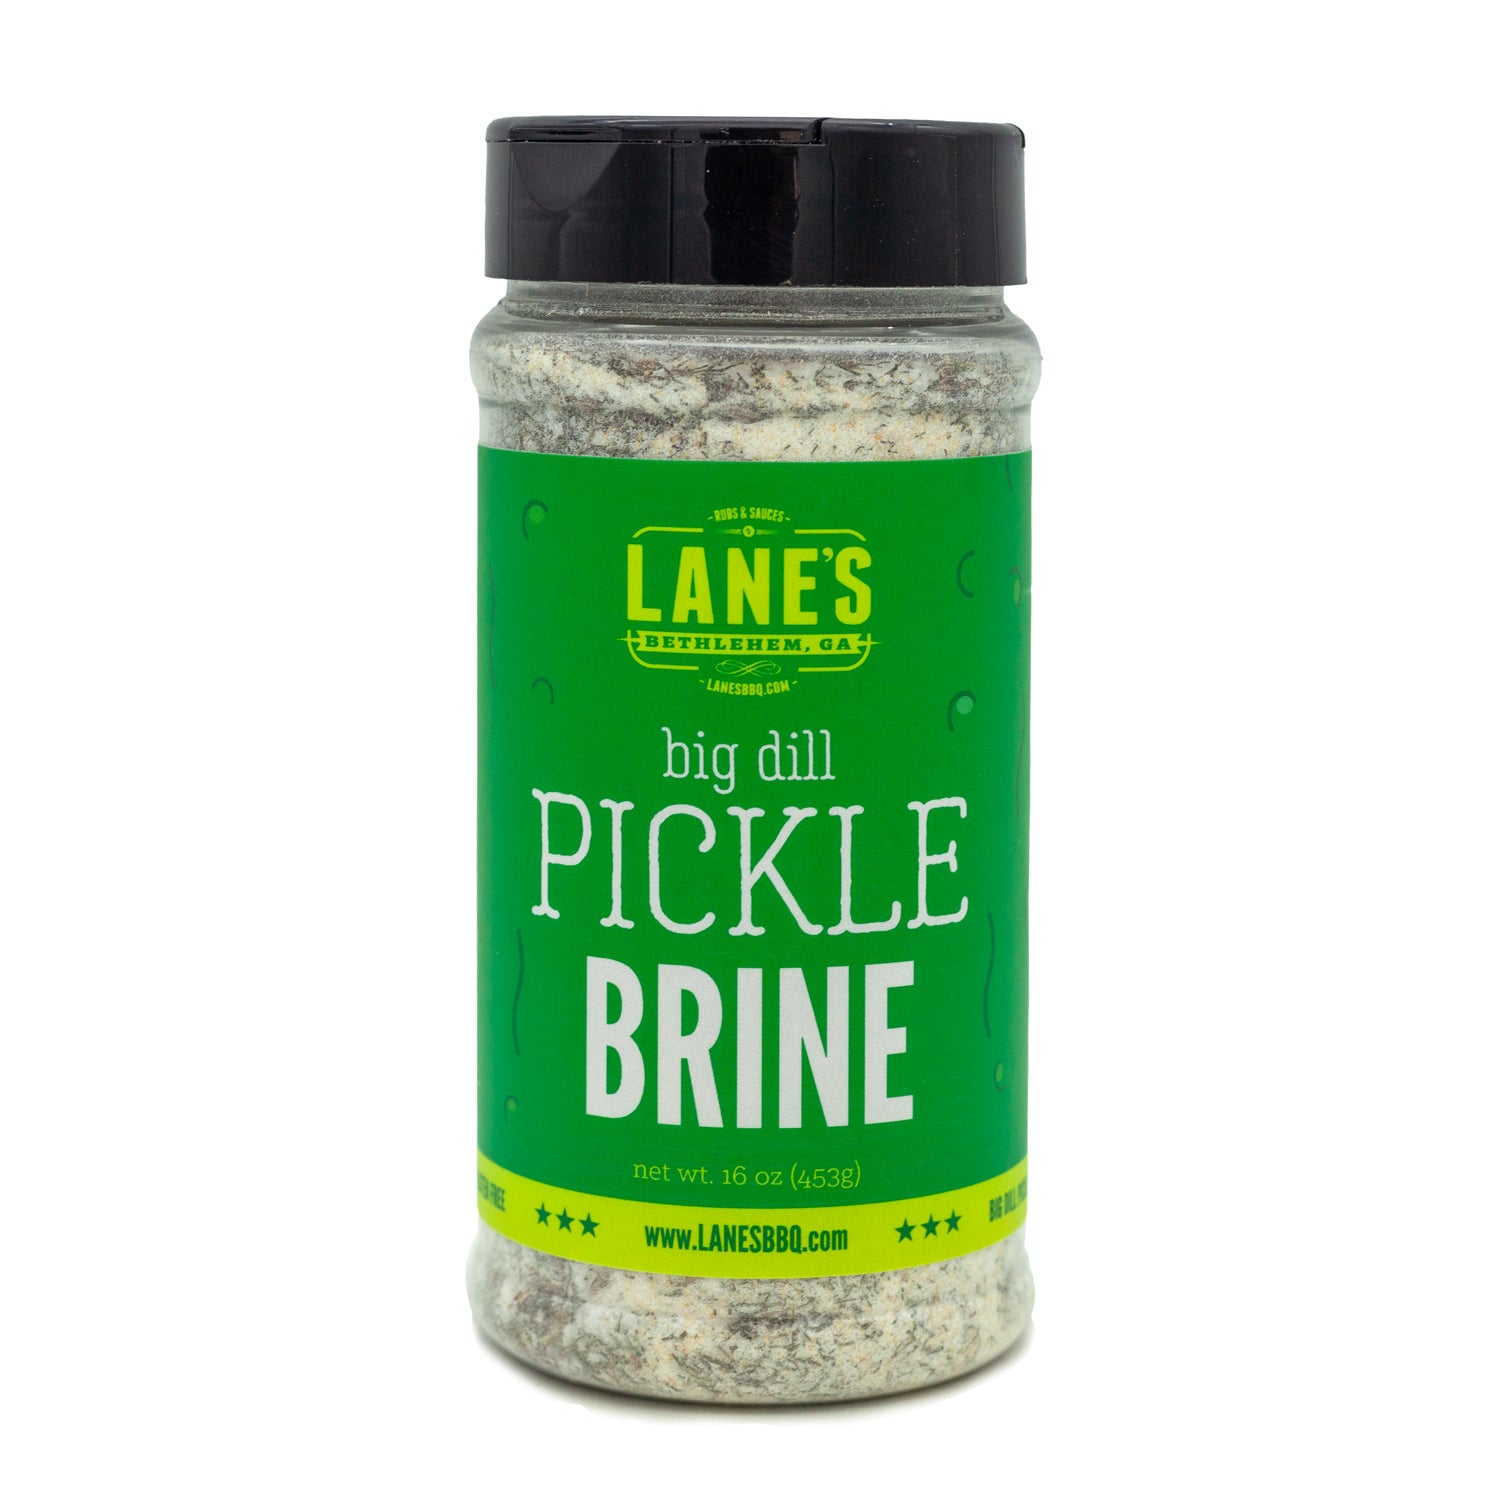 Big Dill Pickle Brine